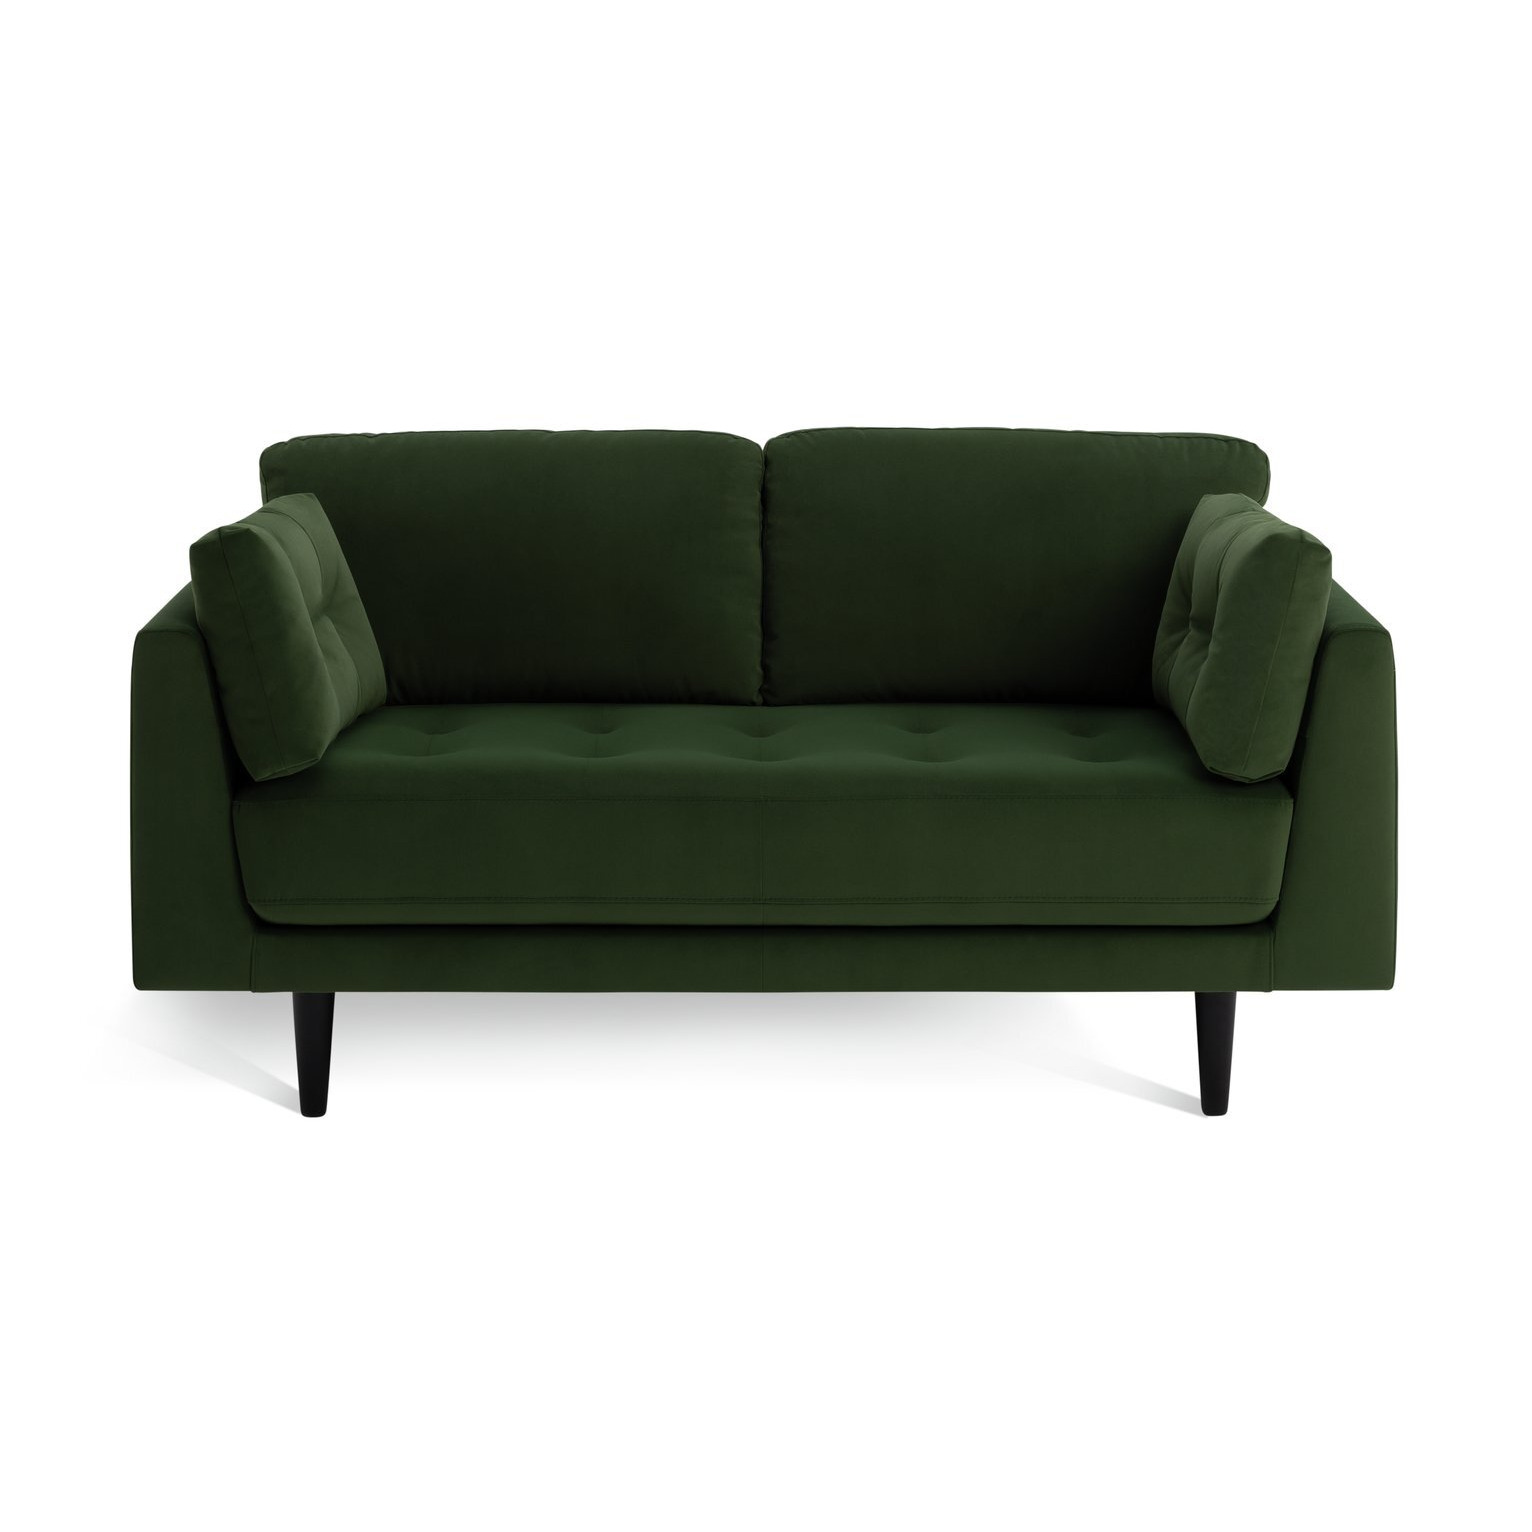 Habitat Kleo Fabric 2 Seater Sofa - Forest Green - image 1